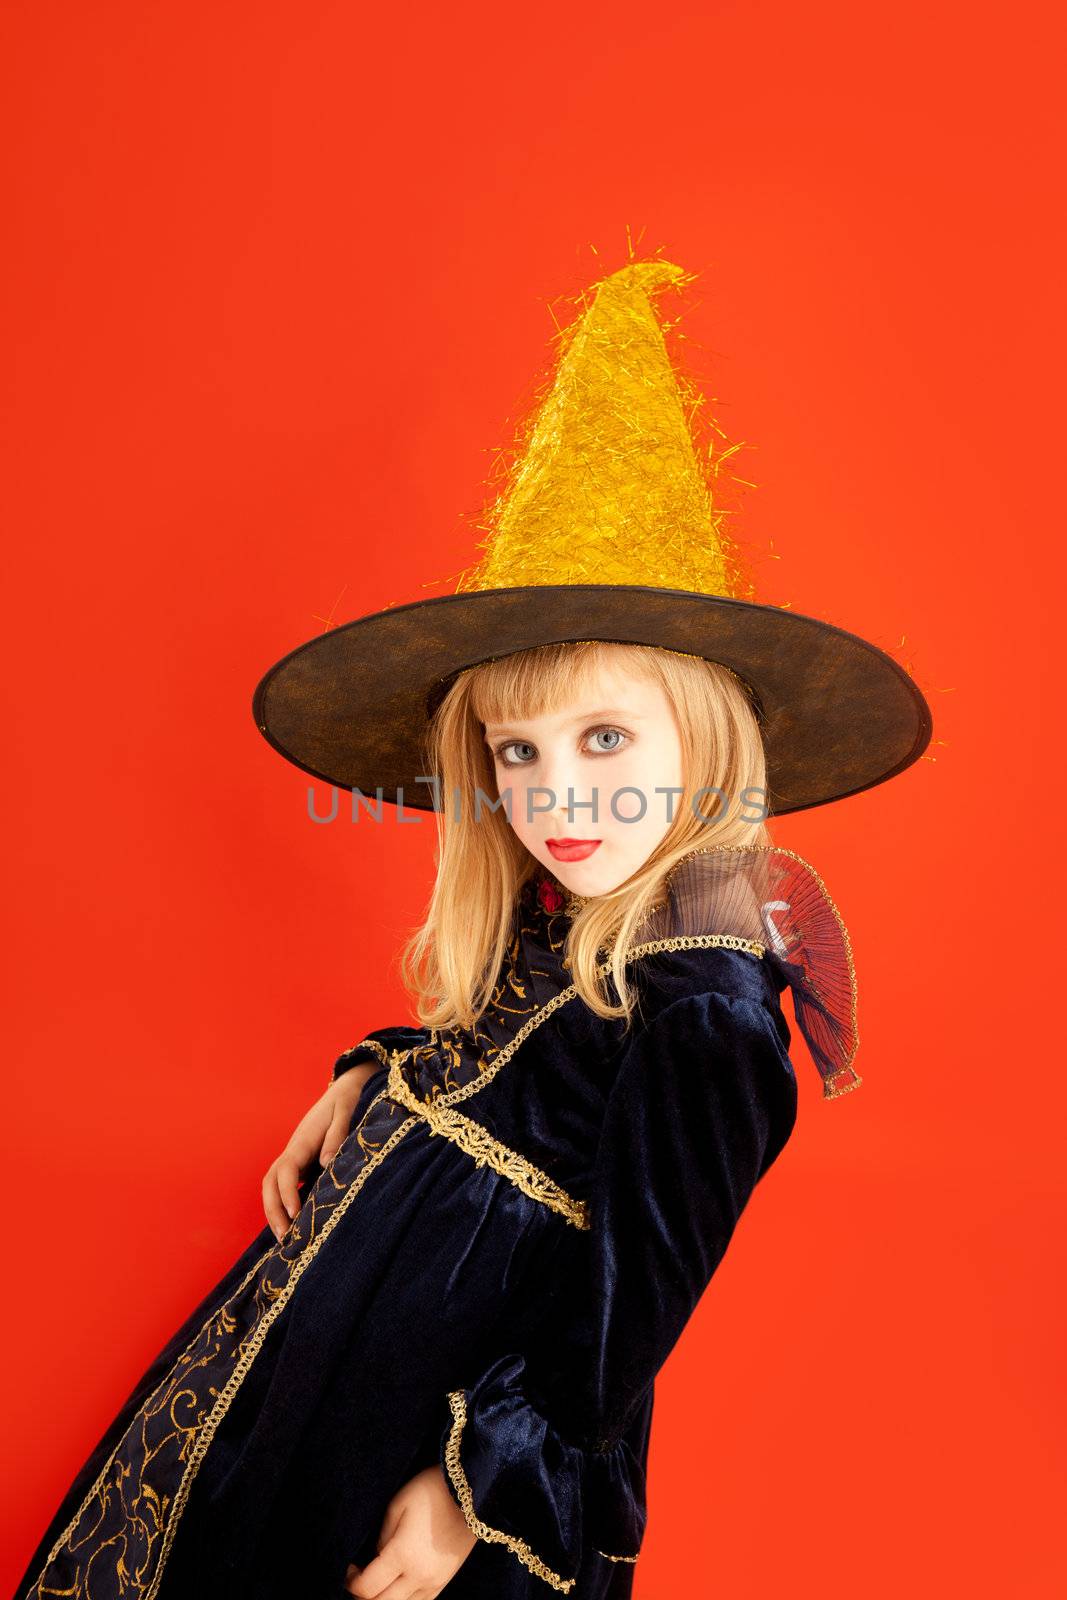 Halloween kid girl costume on orange background